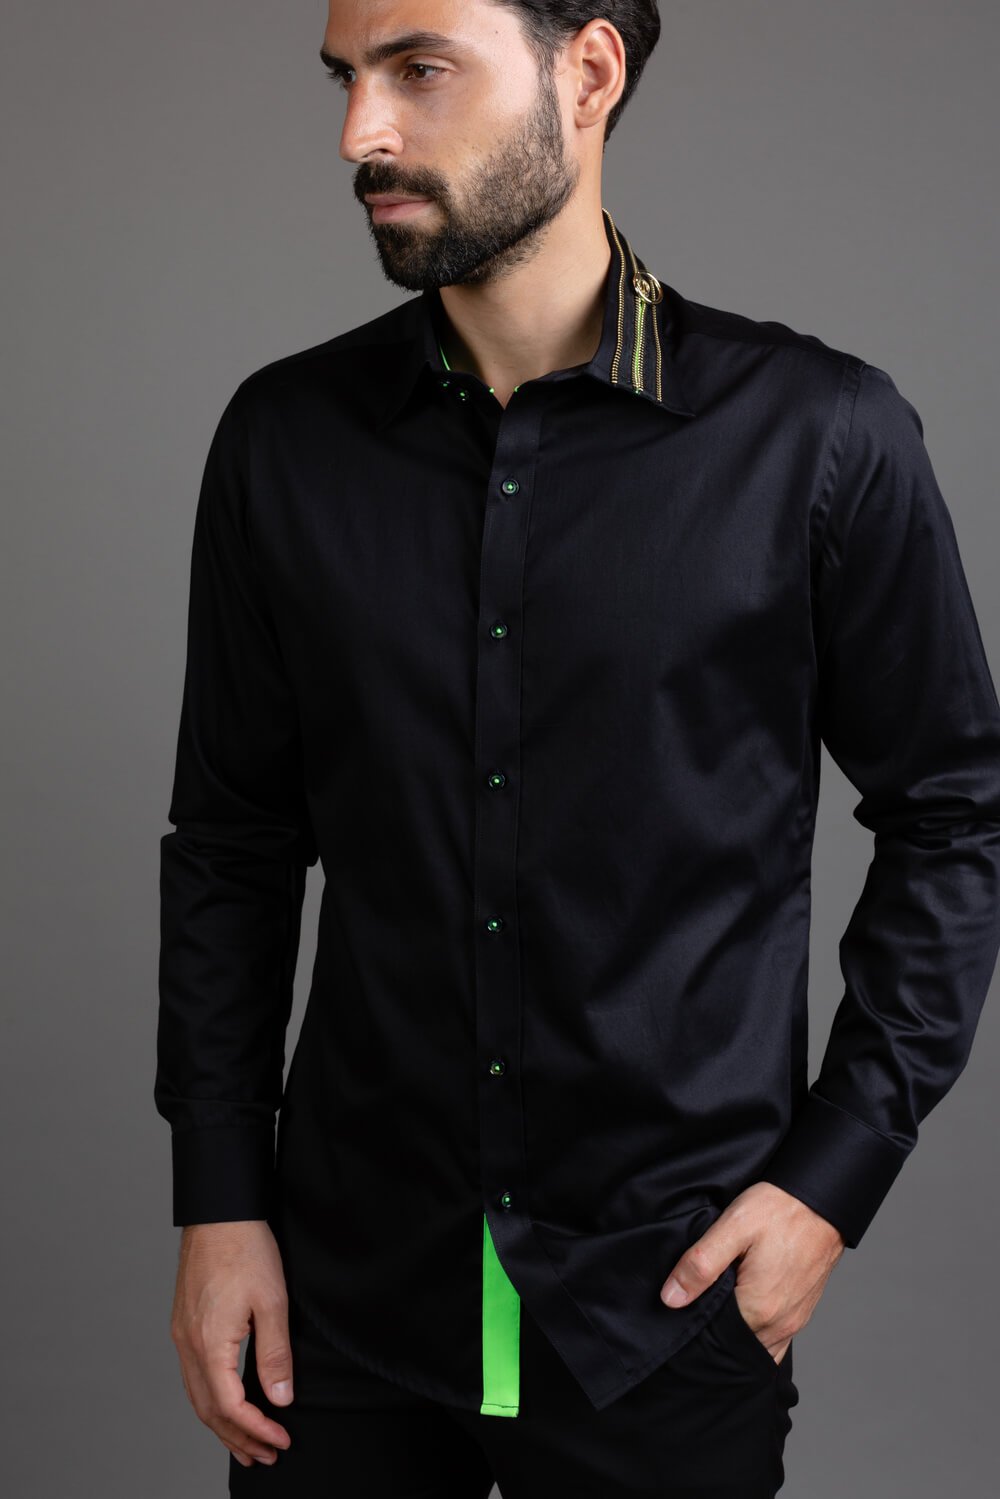 Black High Collar Shirt